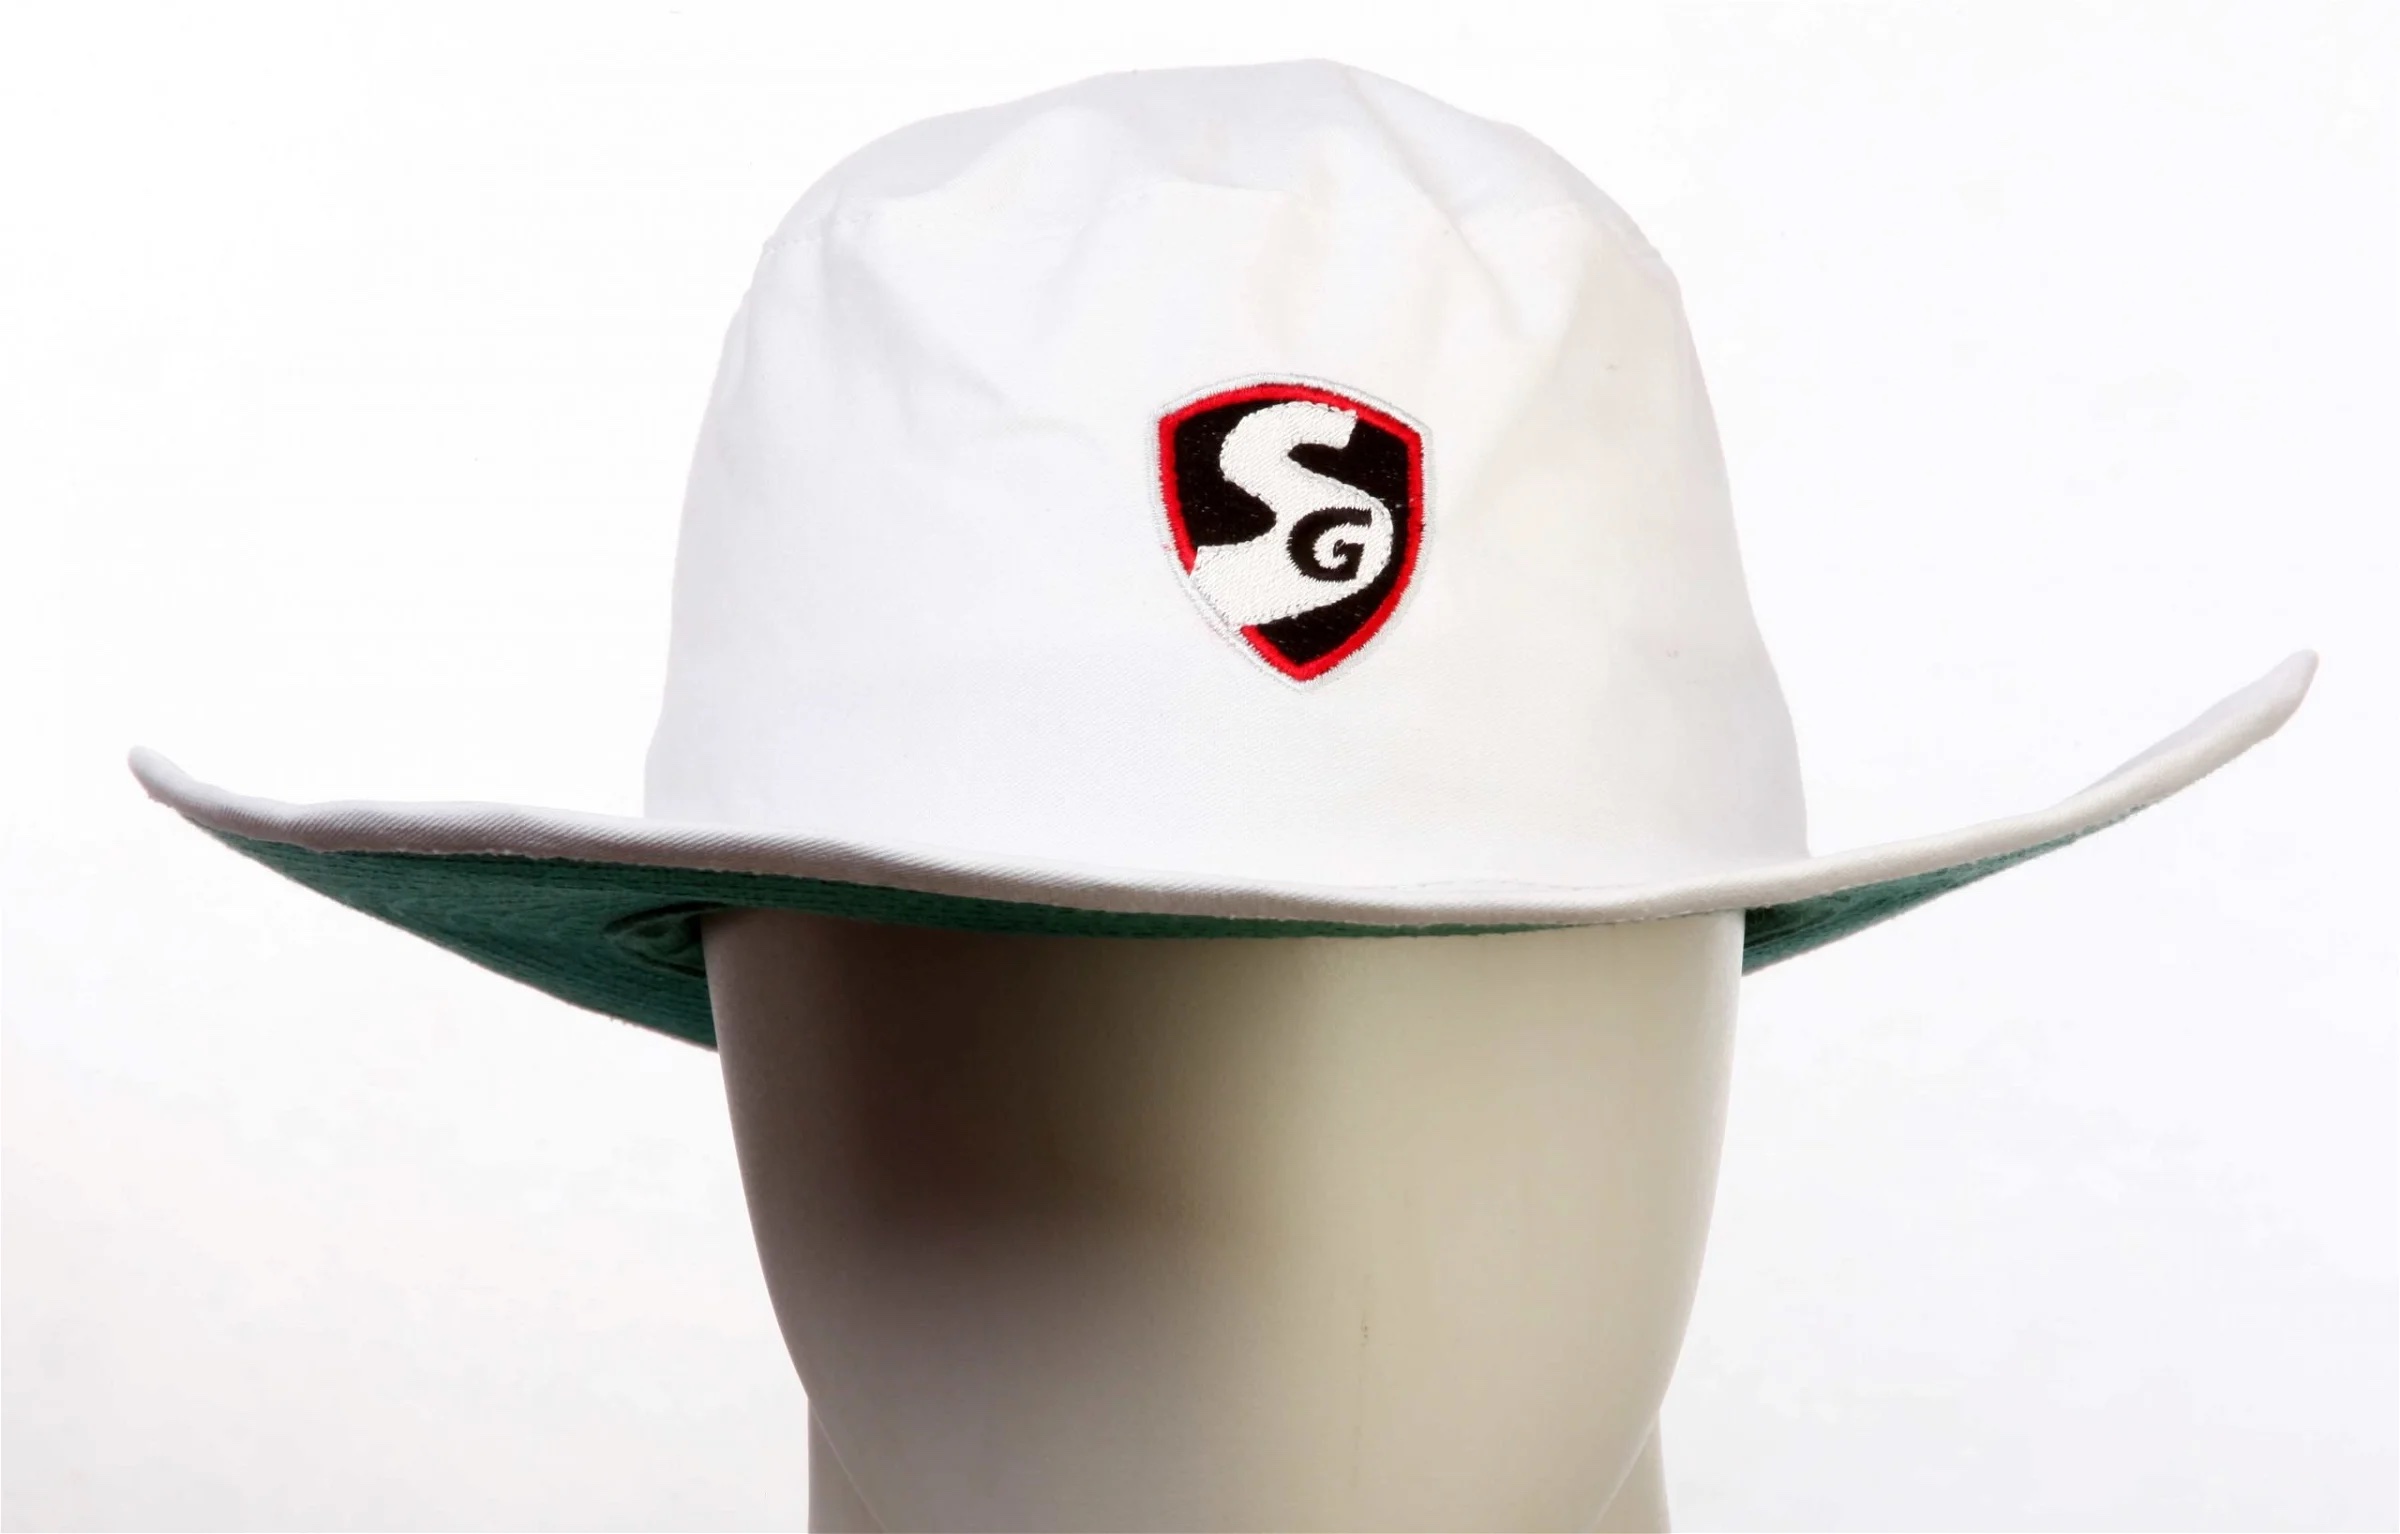 PANAMA PREMIER HAT